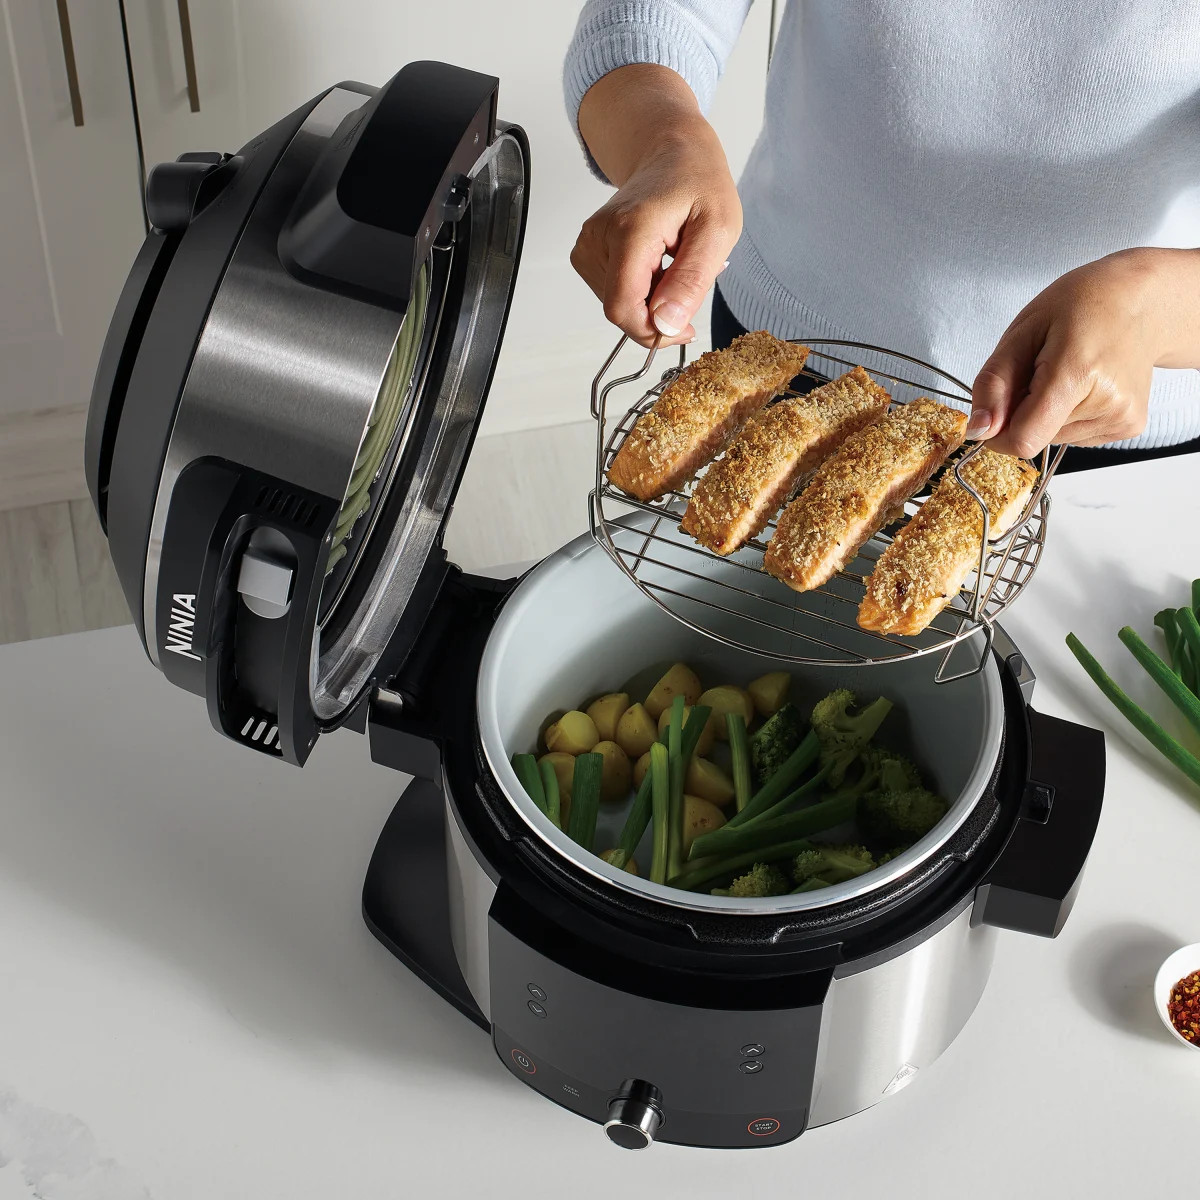 Ninja Foodi Pressure Cooker Steam Fryer with SmartLid OL550EU